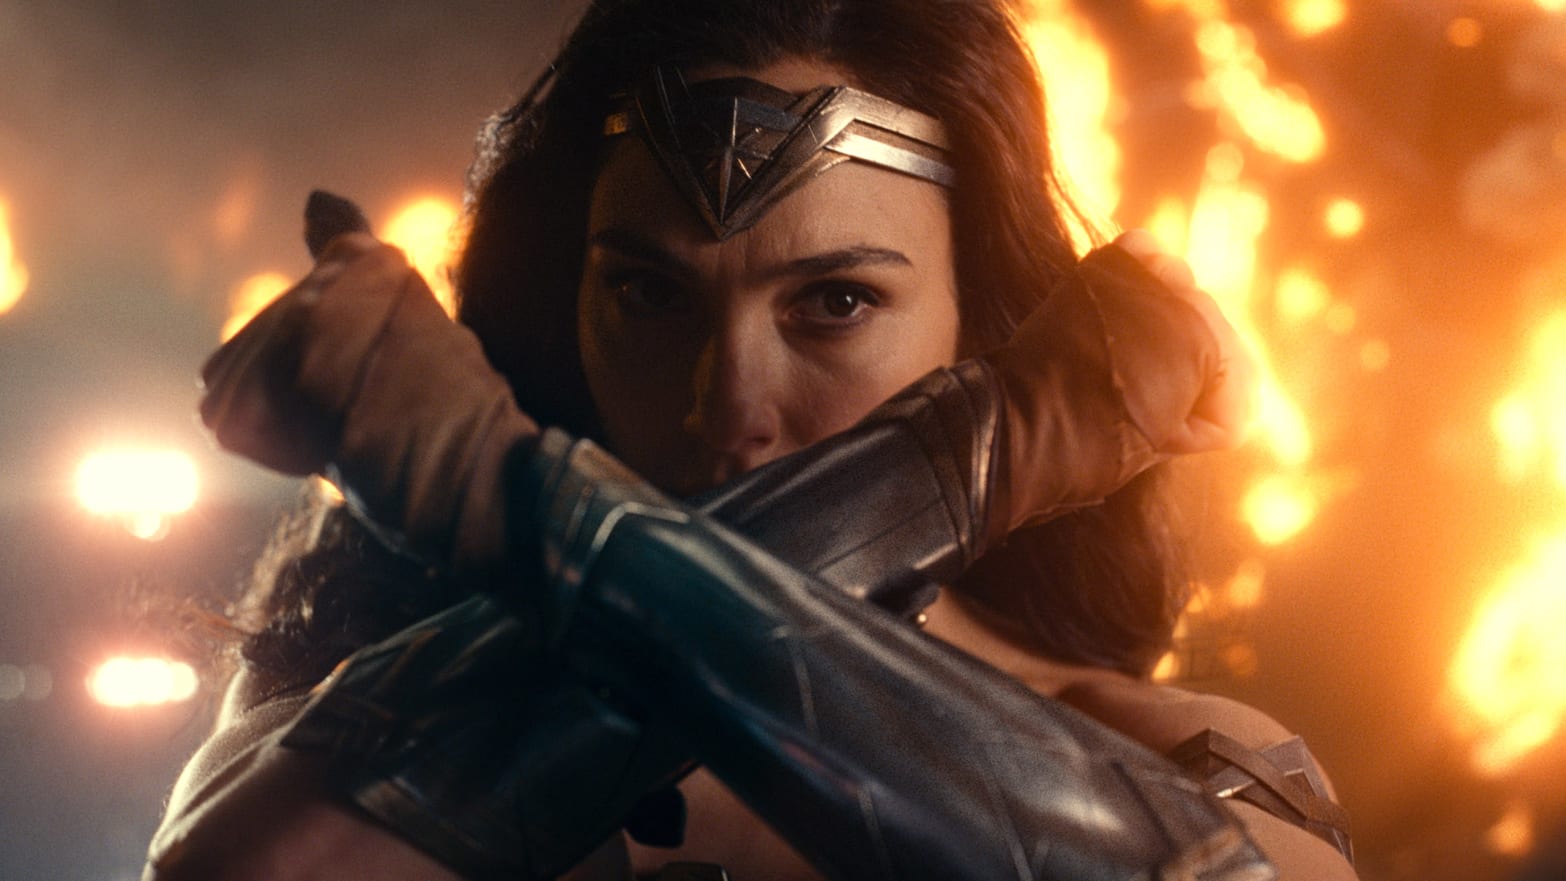 Gal Gadot Fucking Video - Wonder Woman' Gal Gadot Gets Dragged Into a Real-Life Israel-Arab Spy Drama